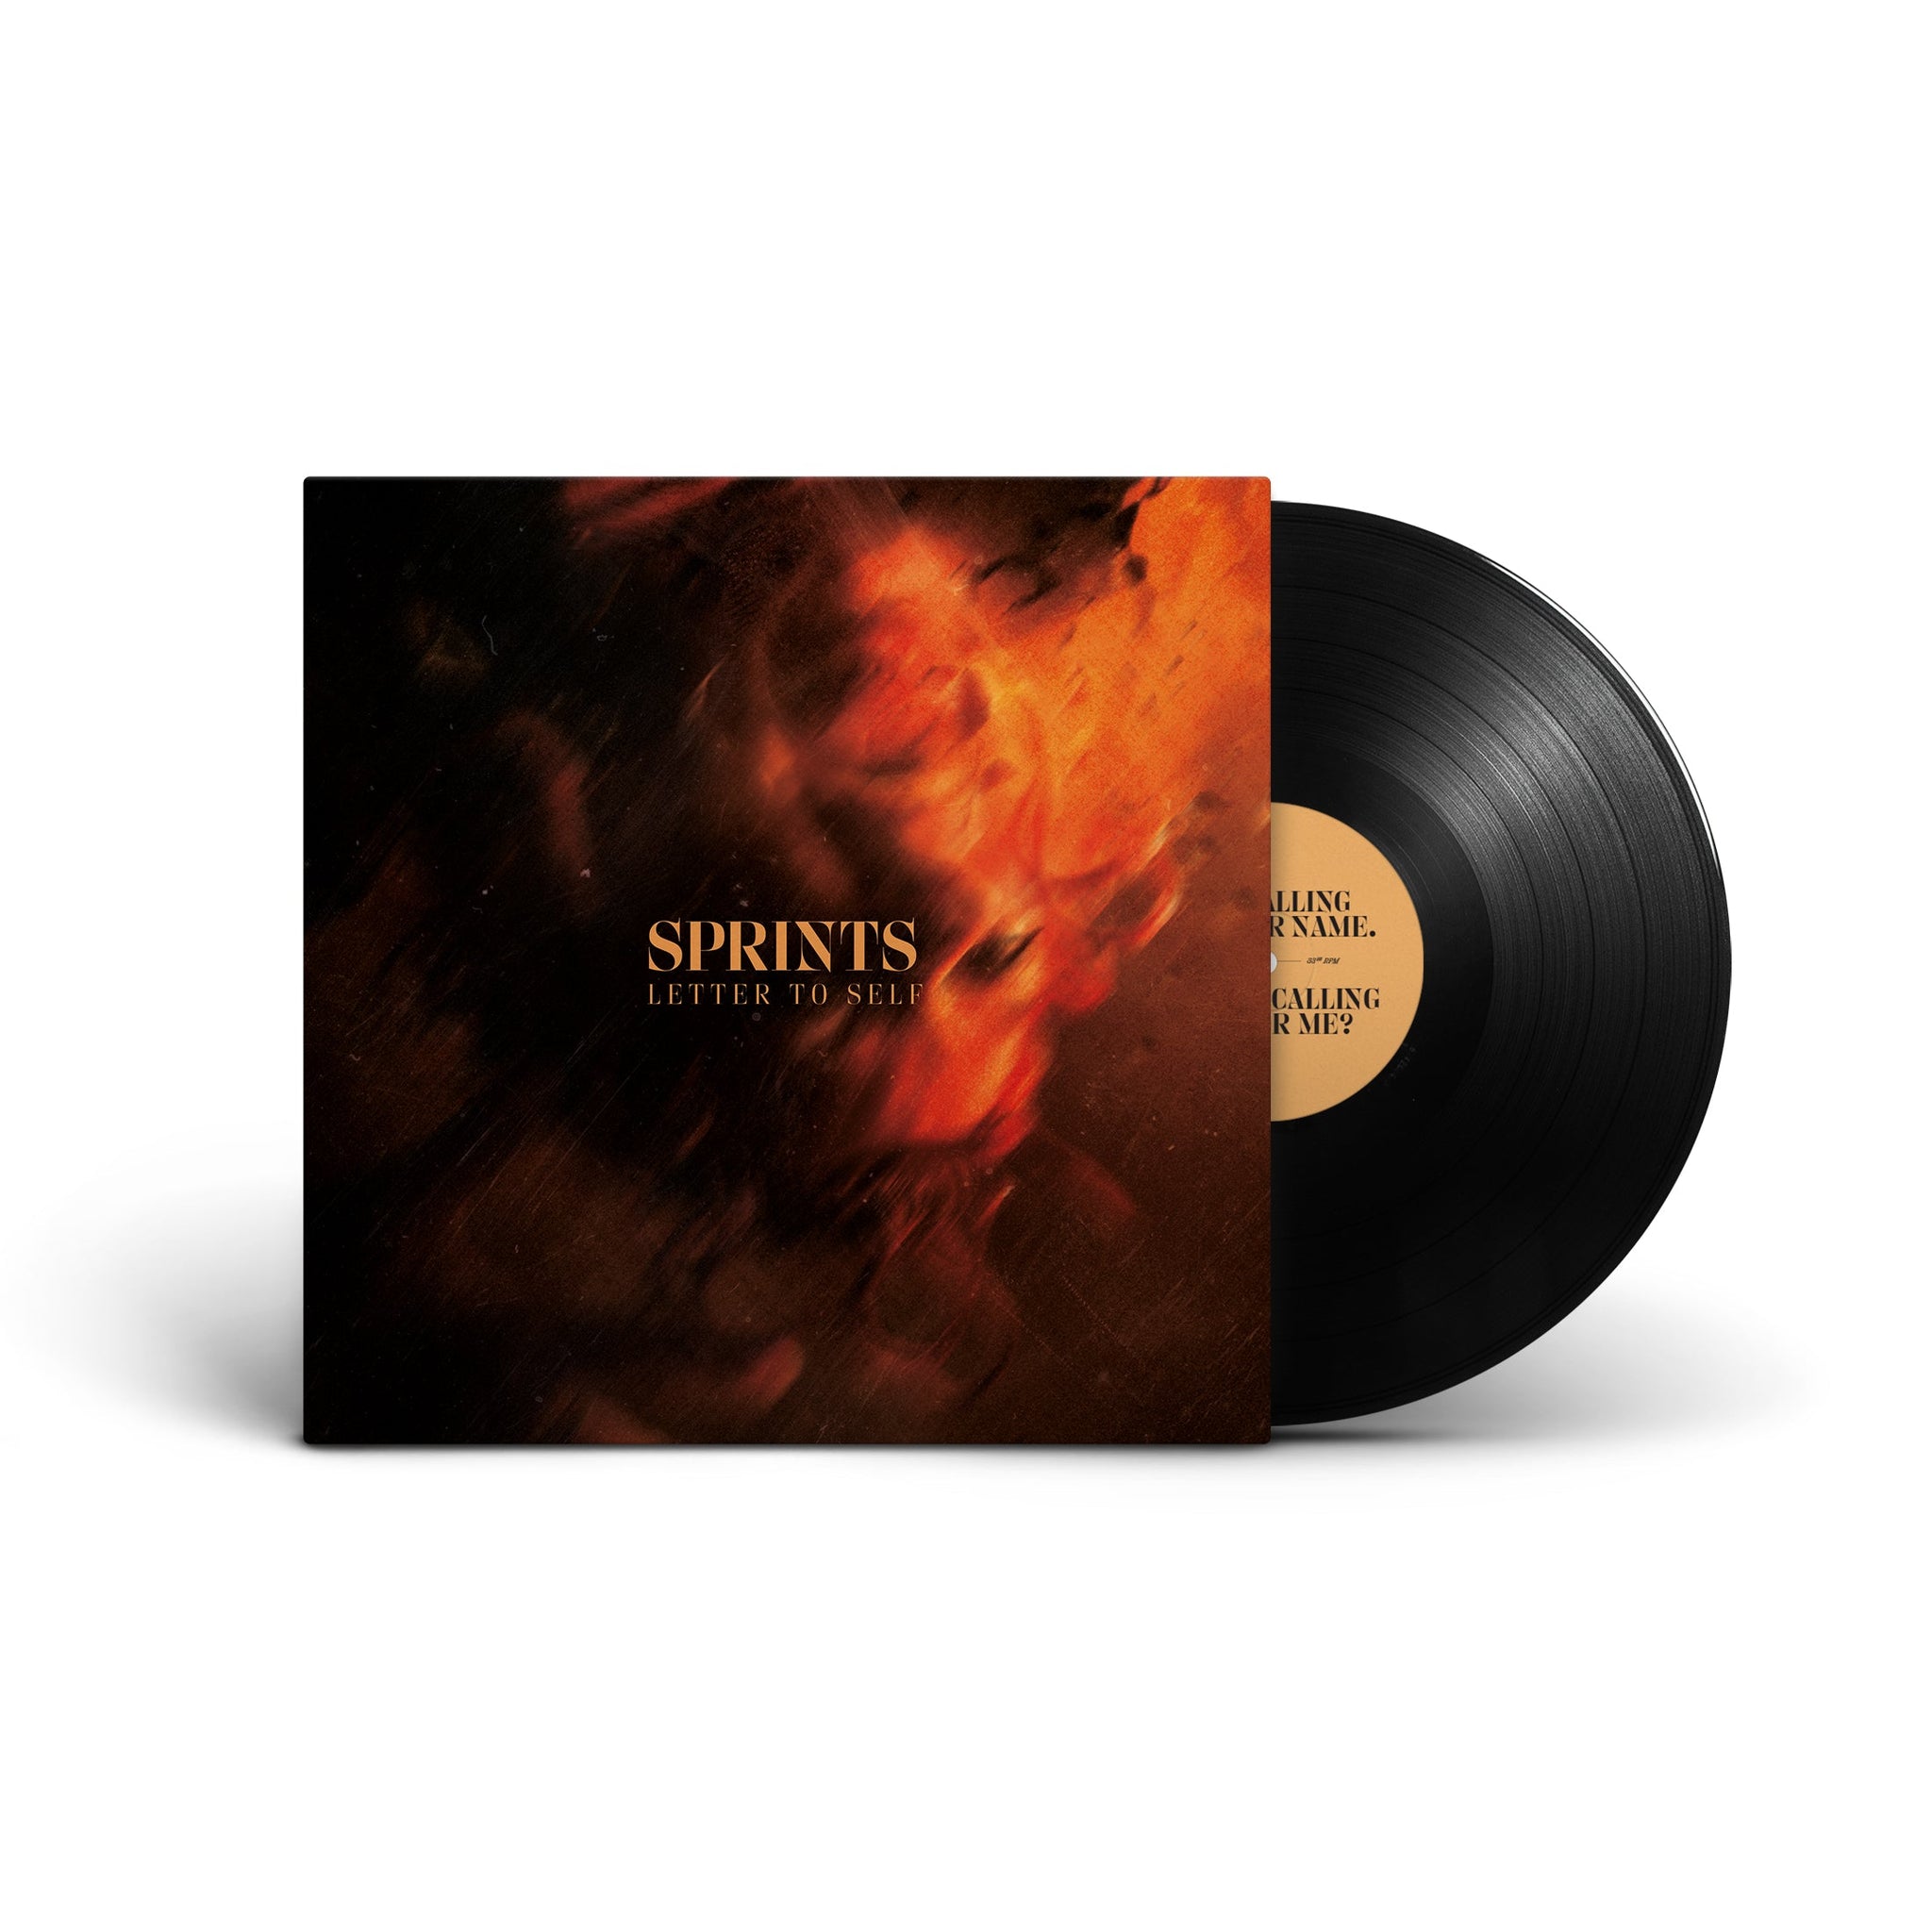 SPRINTS - Letter To Self - LP - Black Vinyl